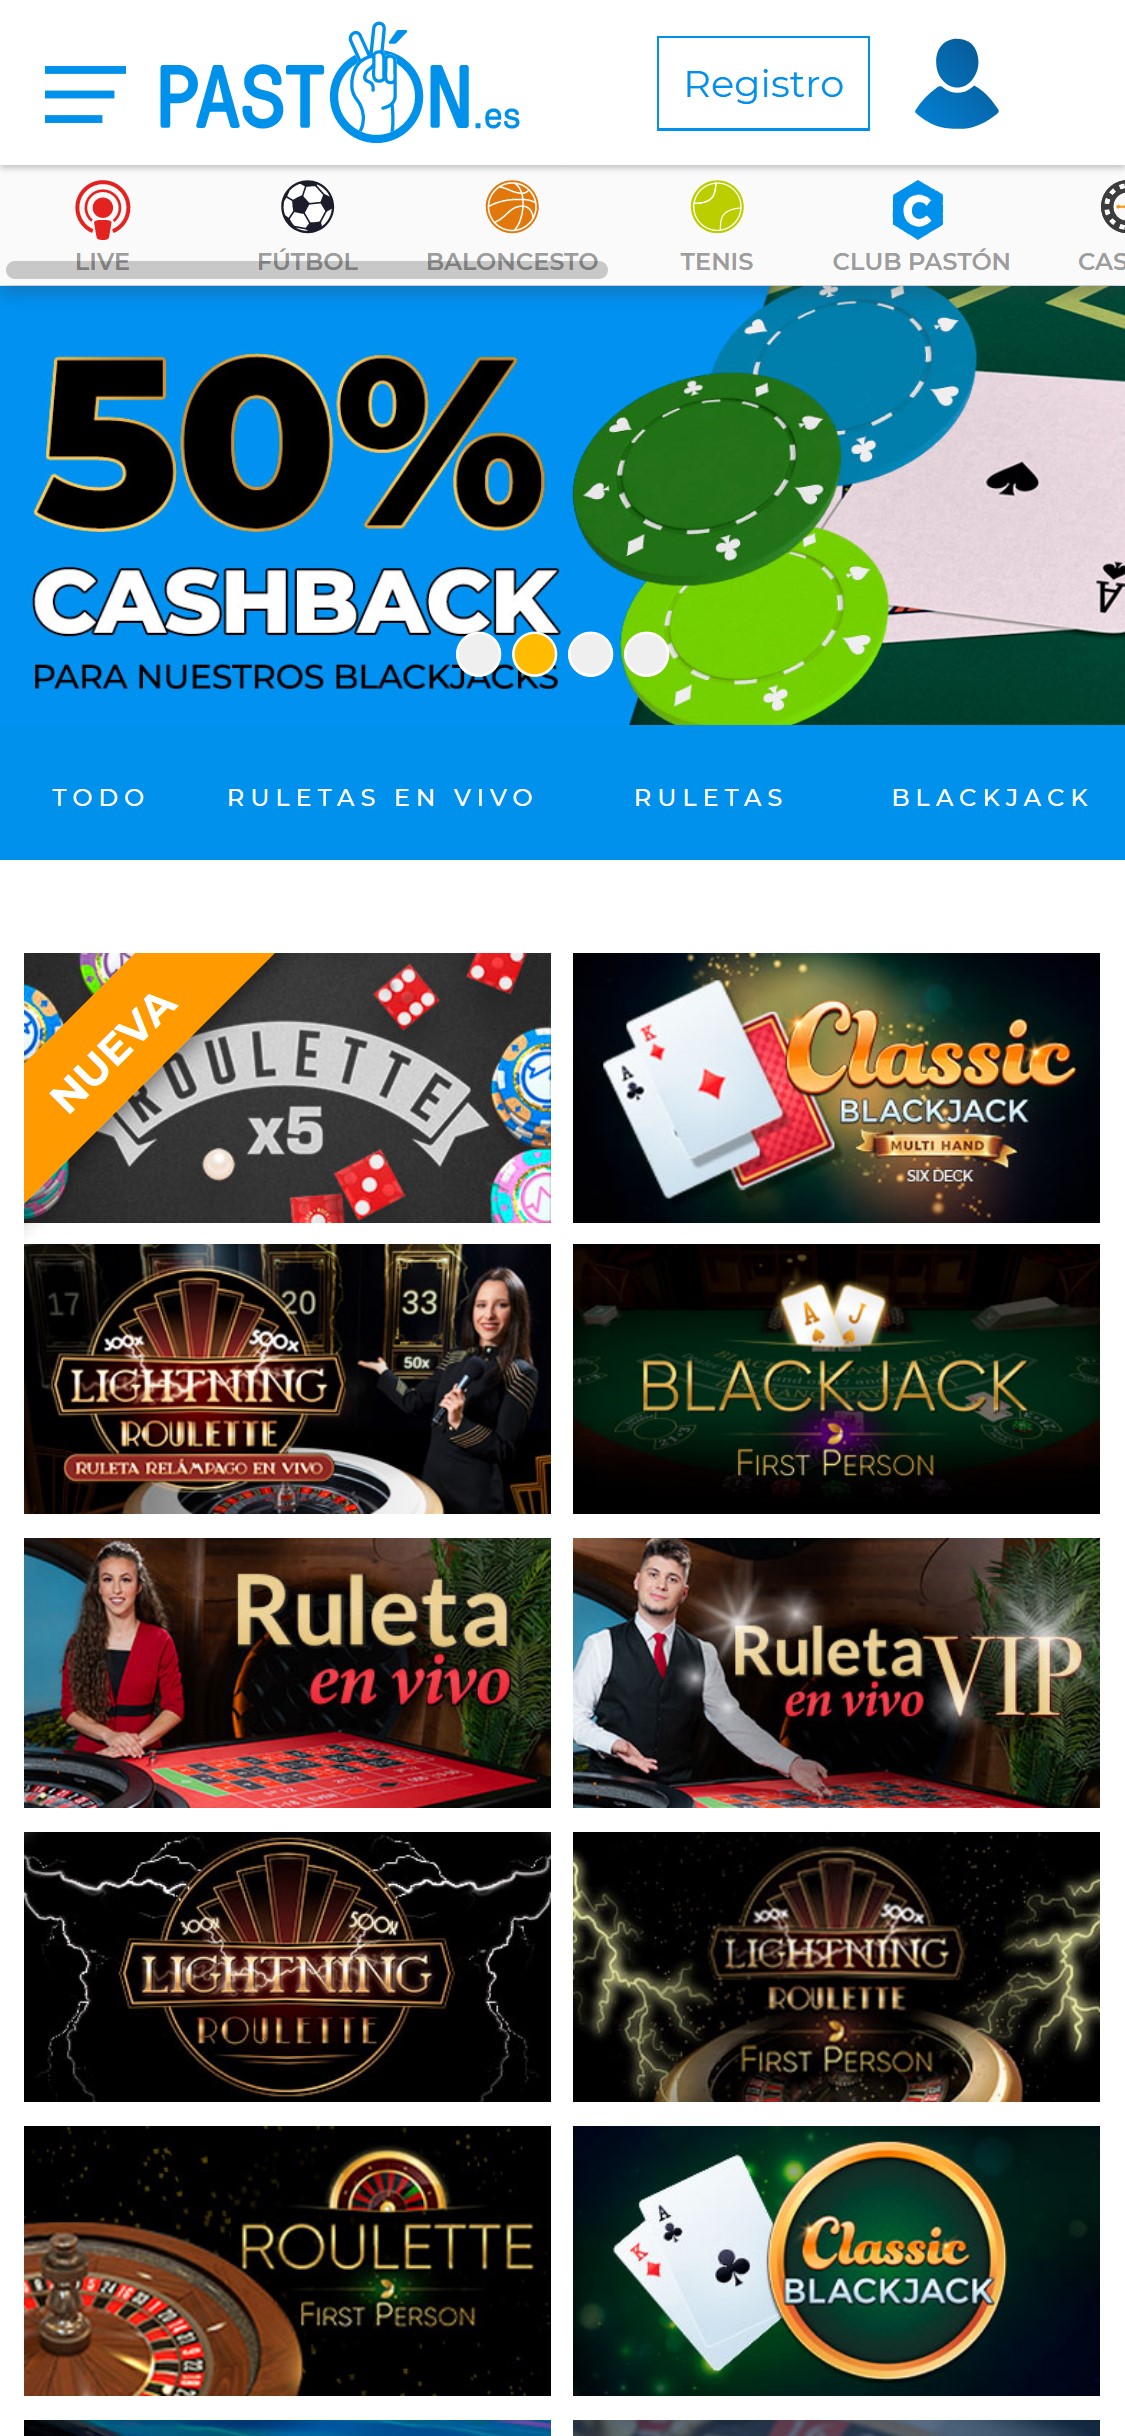 Paston Casino Mobile Games Review